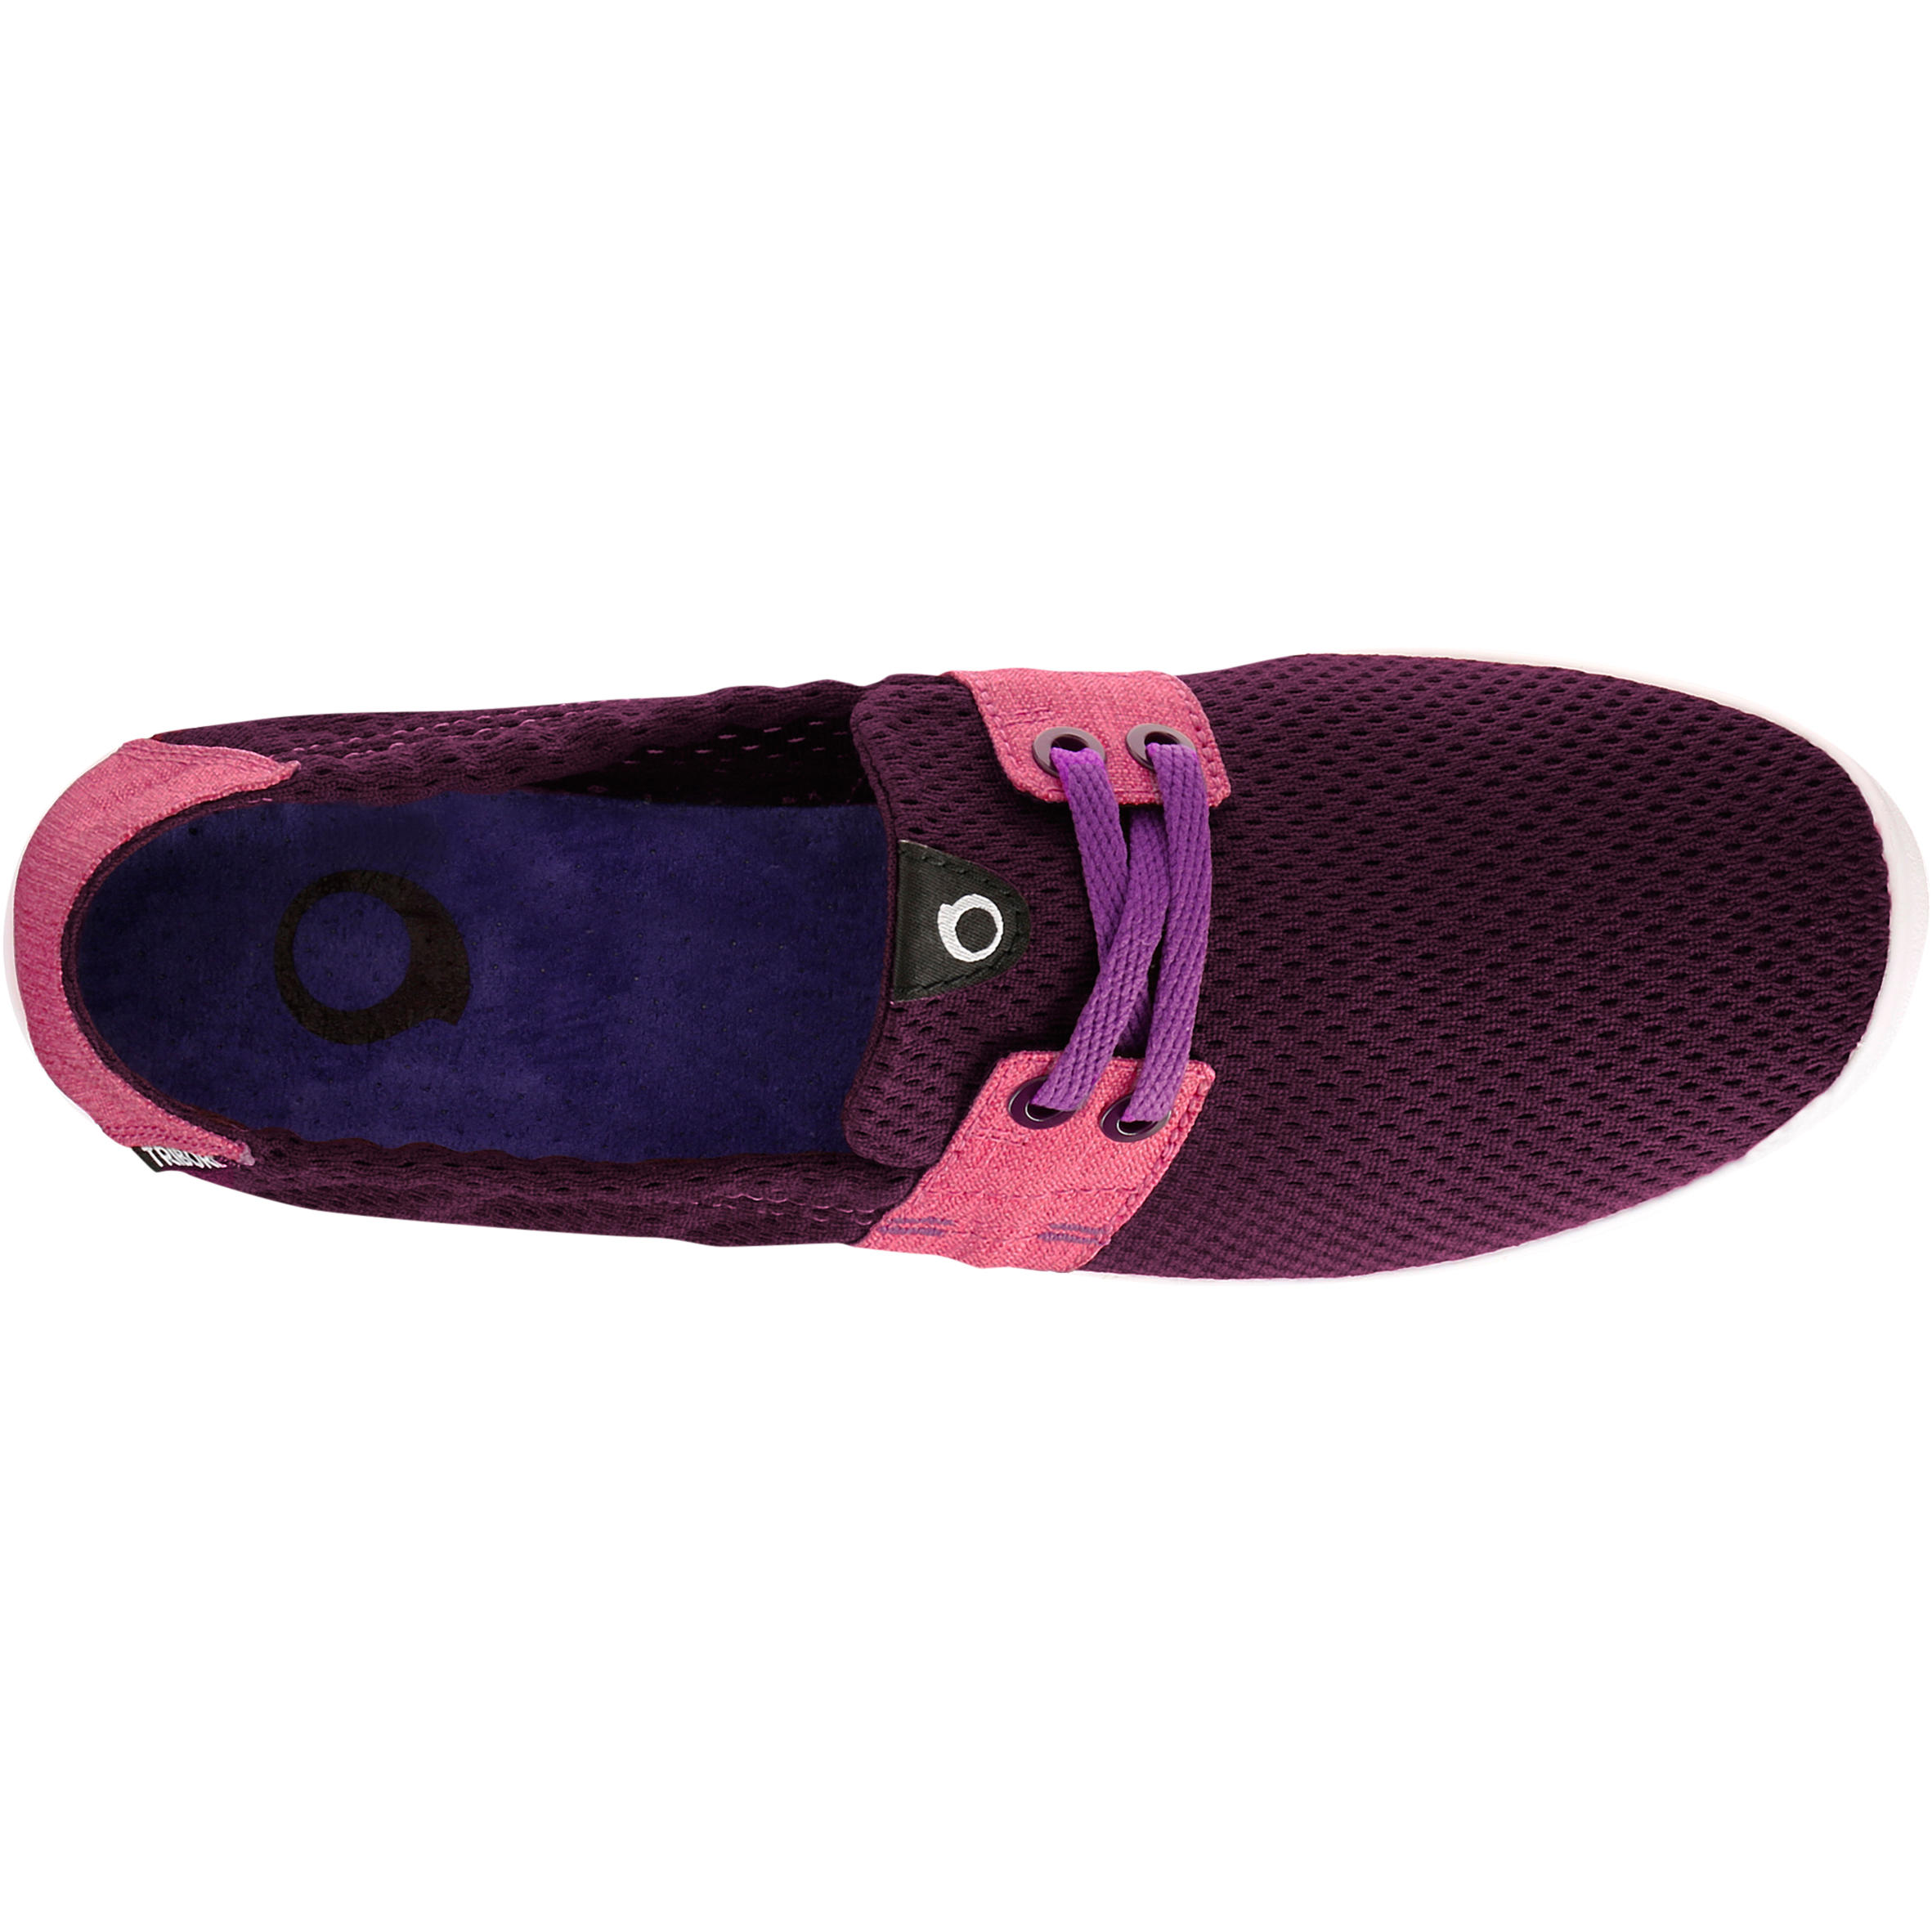 AREETA W women's beach shoes - Purple 6/9